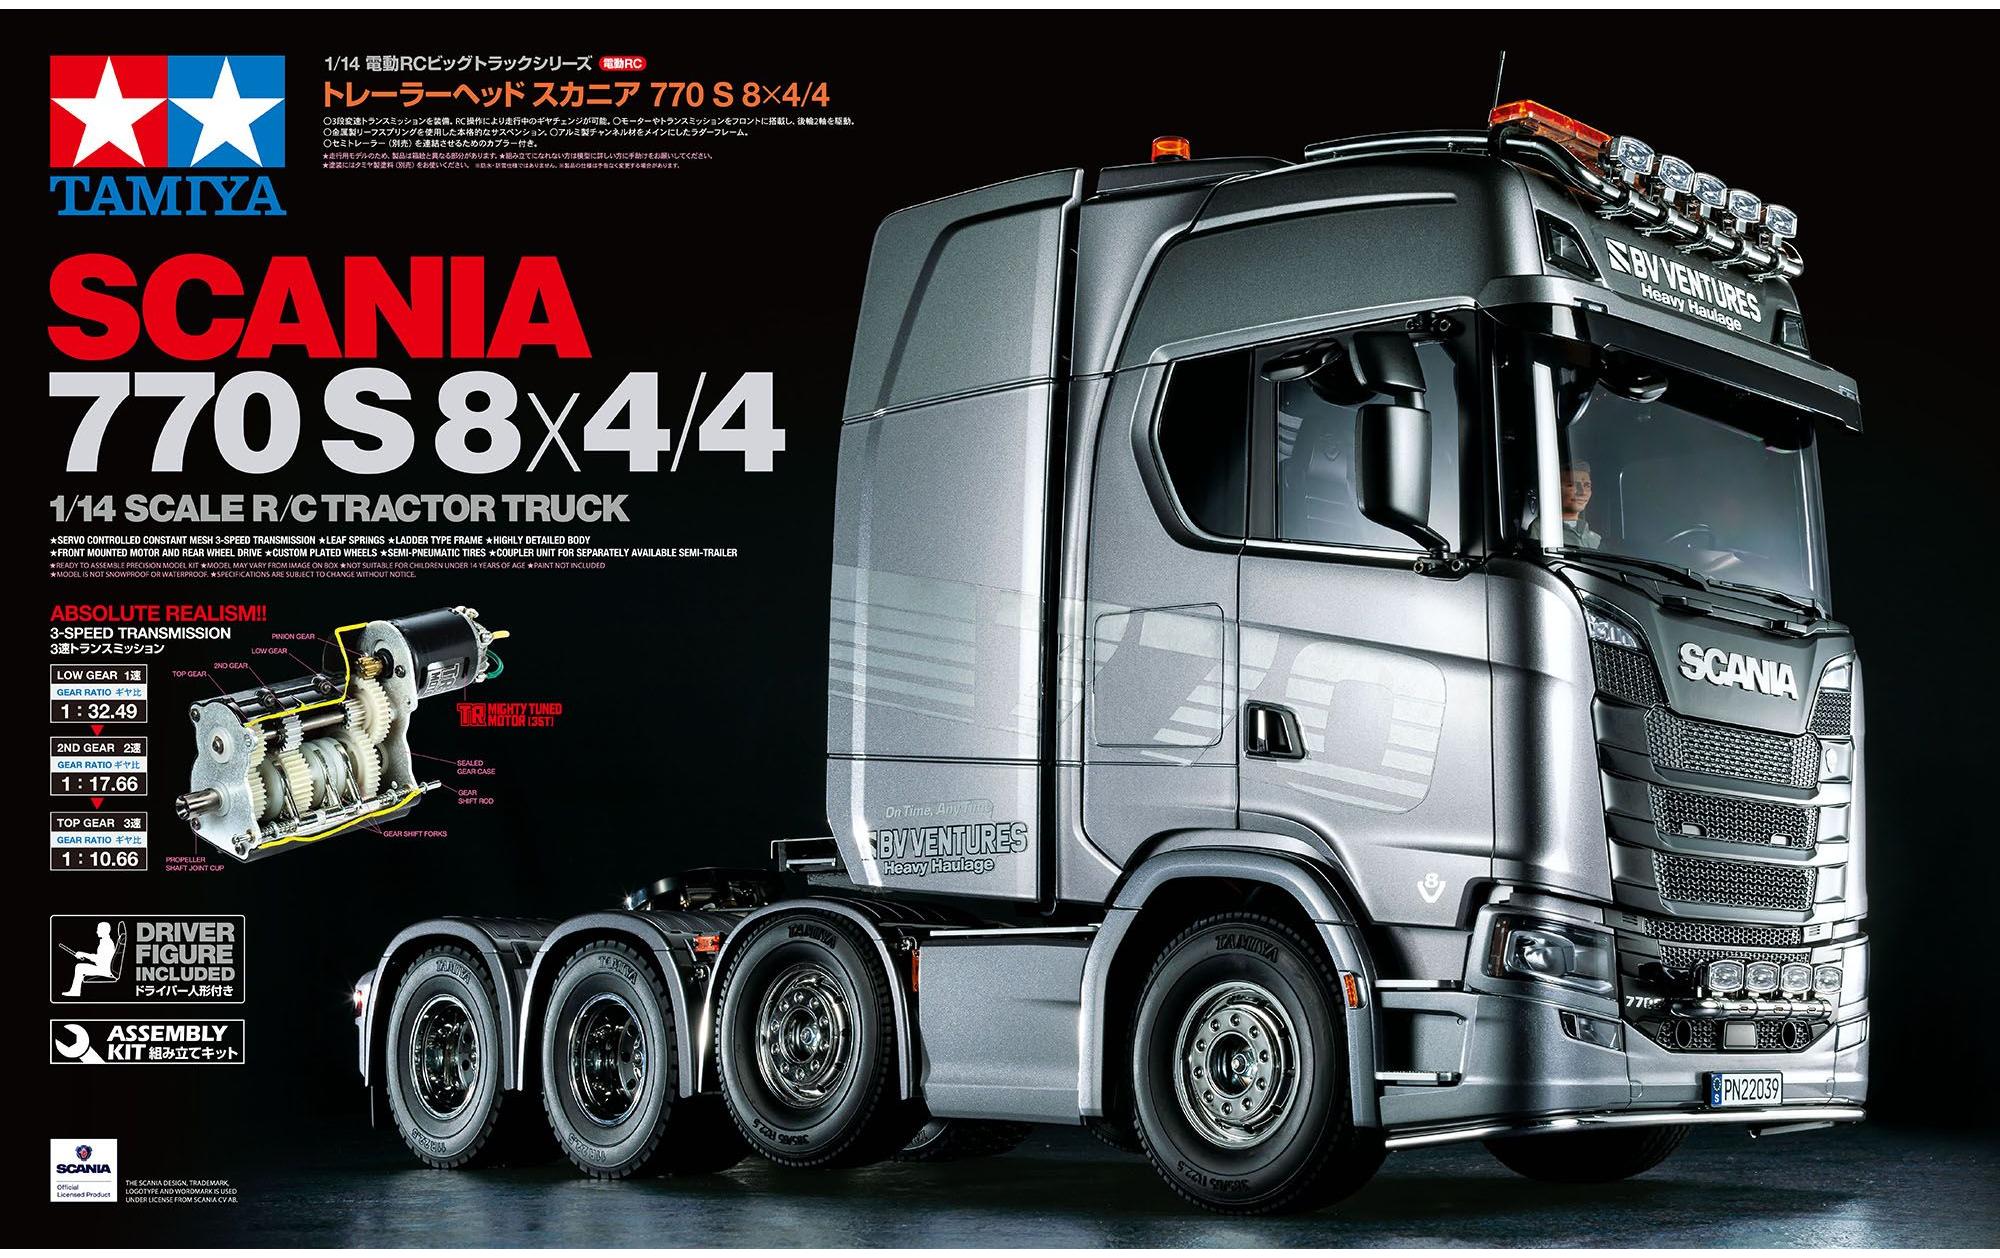 Tamiya Lastwagen Scania 770 S 8x4/4, Bausatz, 1:14